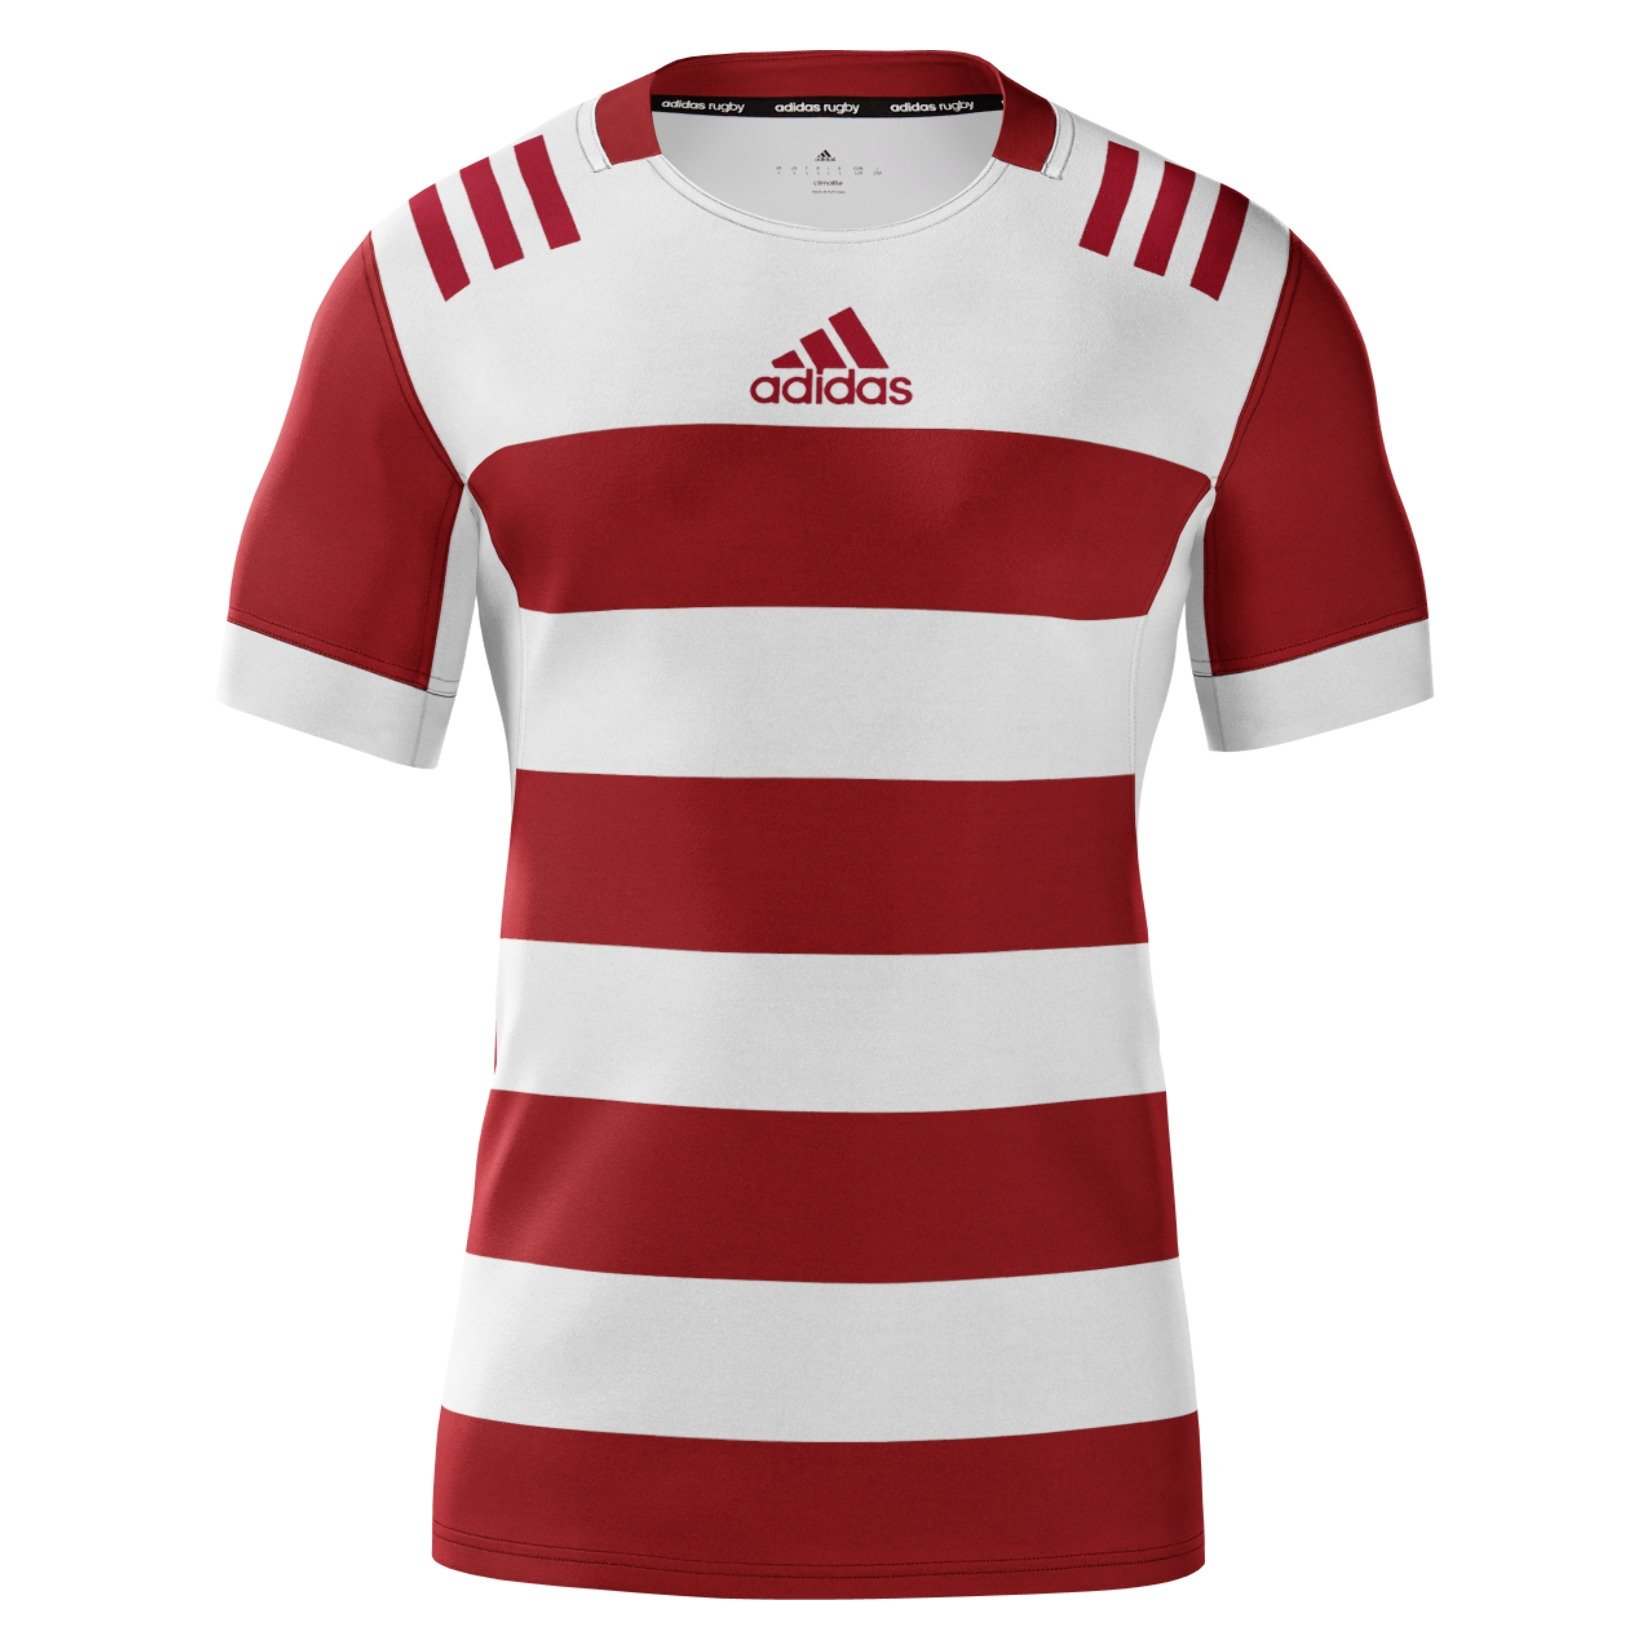 adidas mi Team Customised Fitted Rugby Jersey Adult - Kitlocker.com